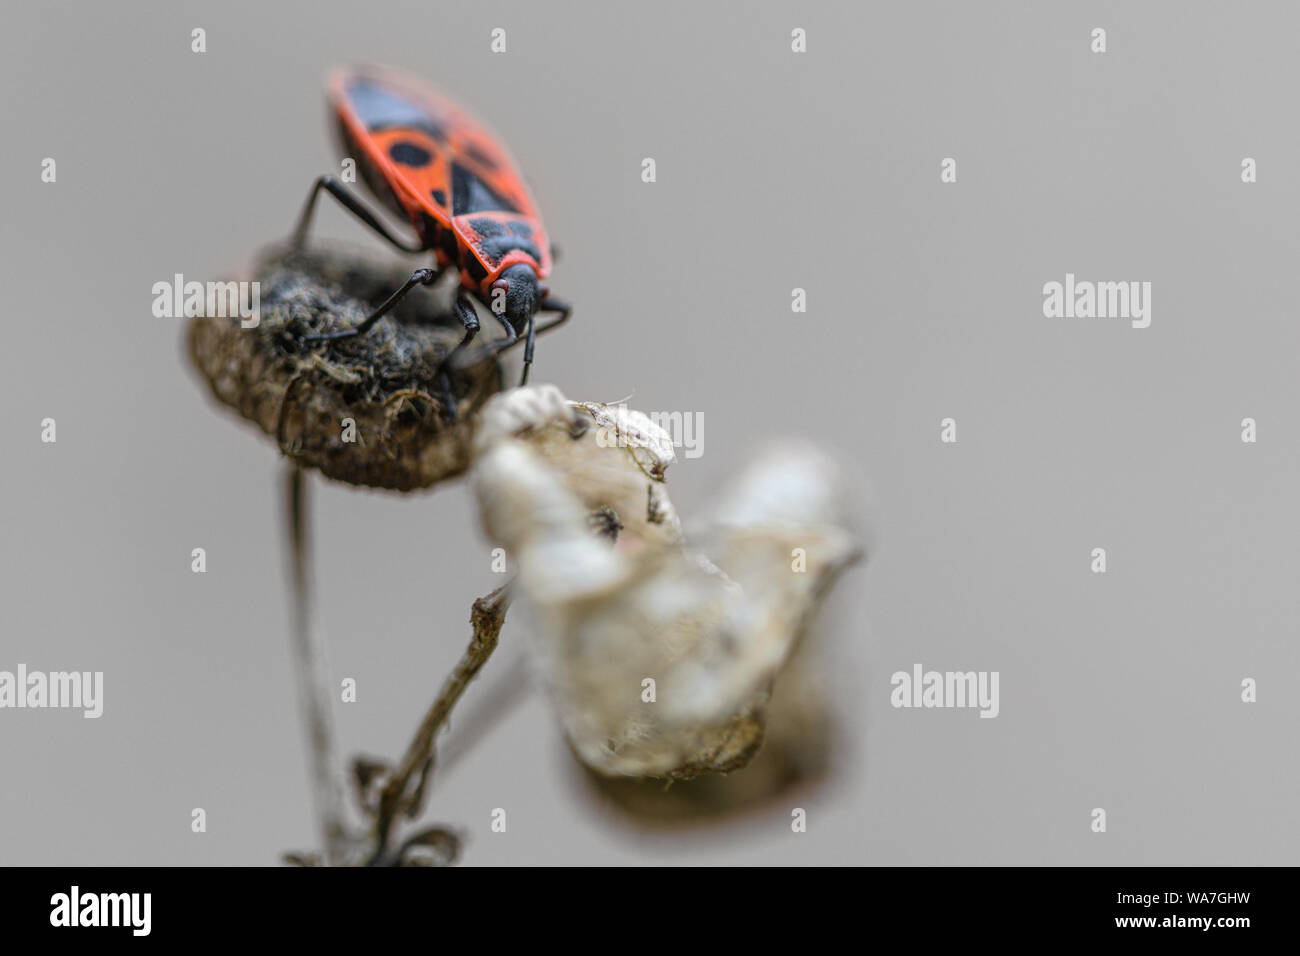 Firebug (Pyrrhocoris apterus) on the dry plant, macro shot, copy space, selected focus, very narrow depth of field Stock Photo